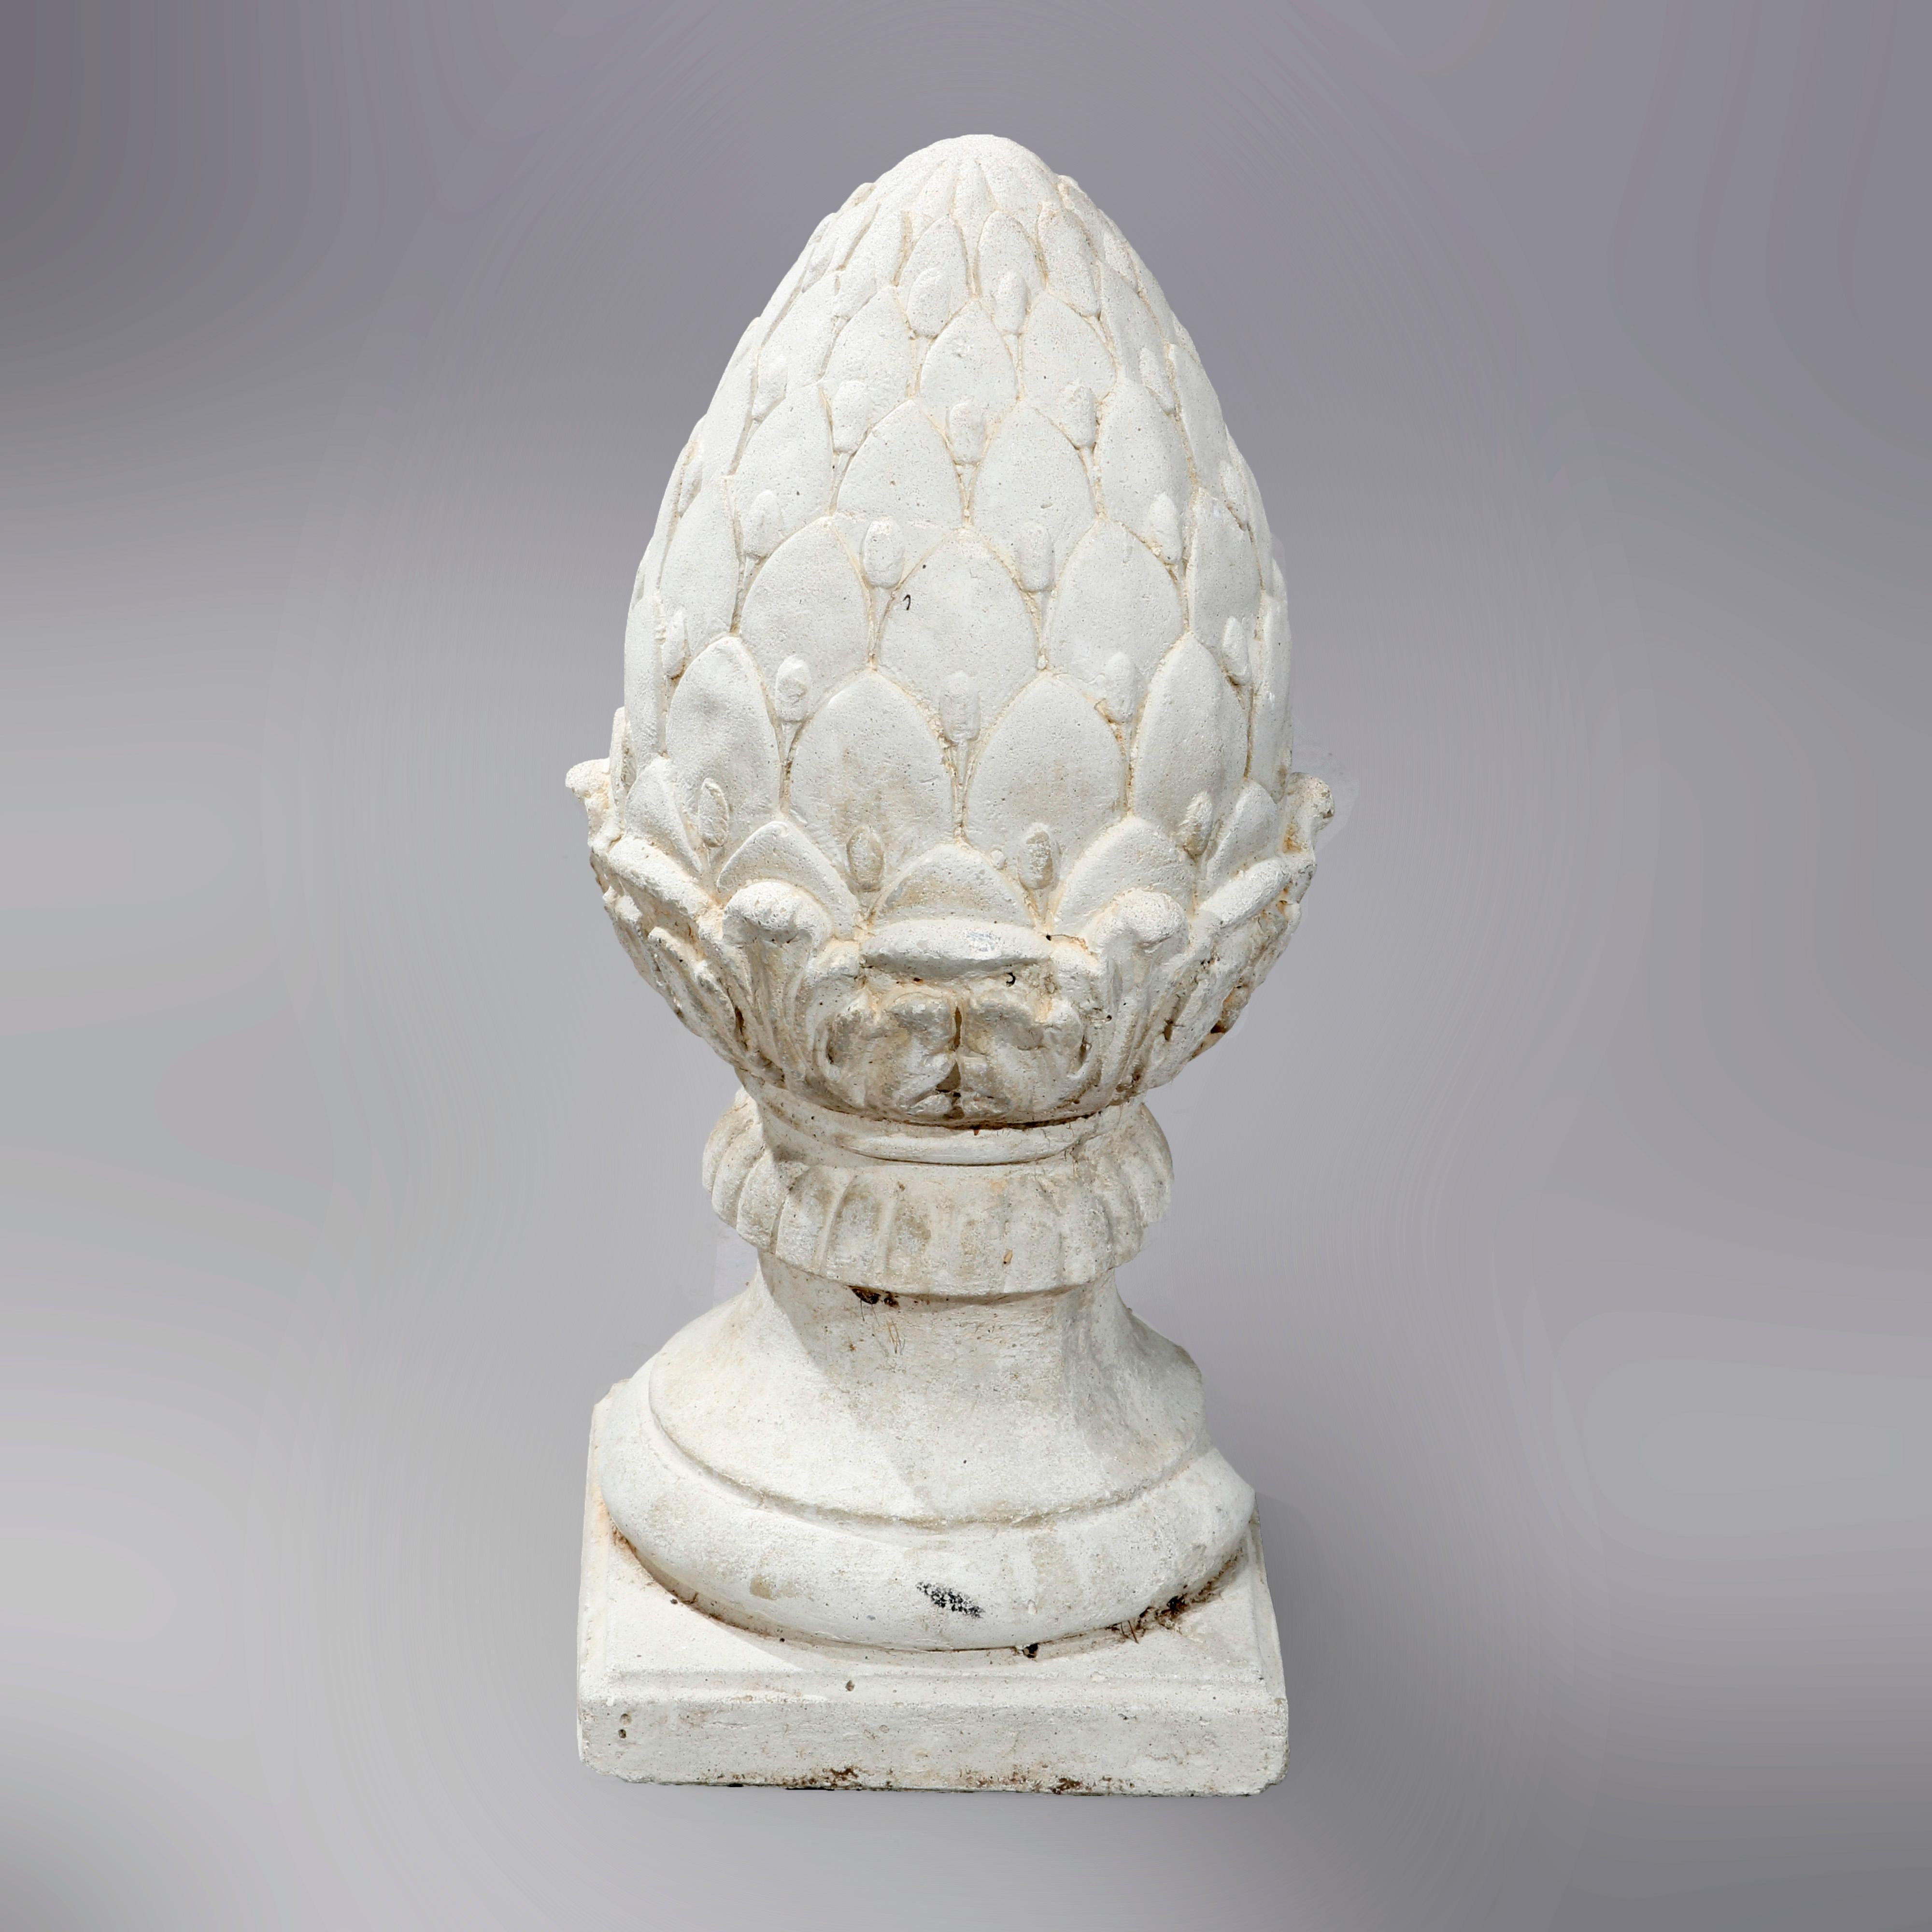 North American Antique Cast Stone Acorn Form Finial Garden Ornaments, 20th Century